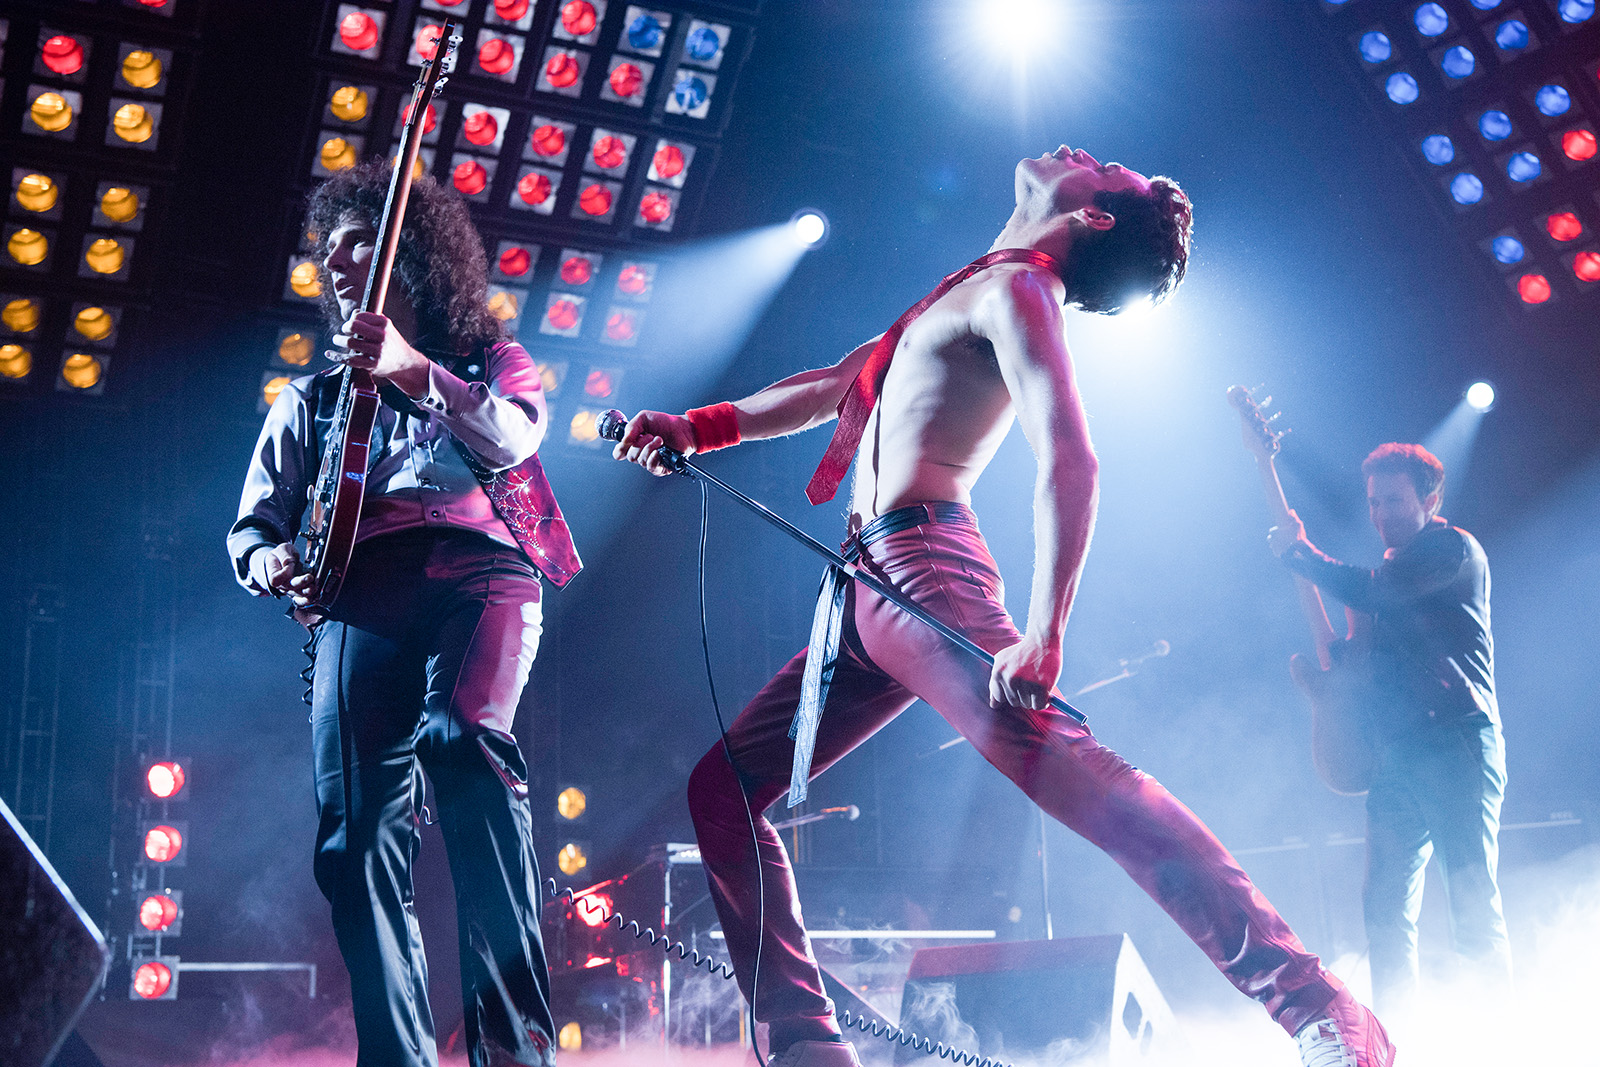 Movie review: 'Bohemian Rhapsody' succeeds as a triumphant